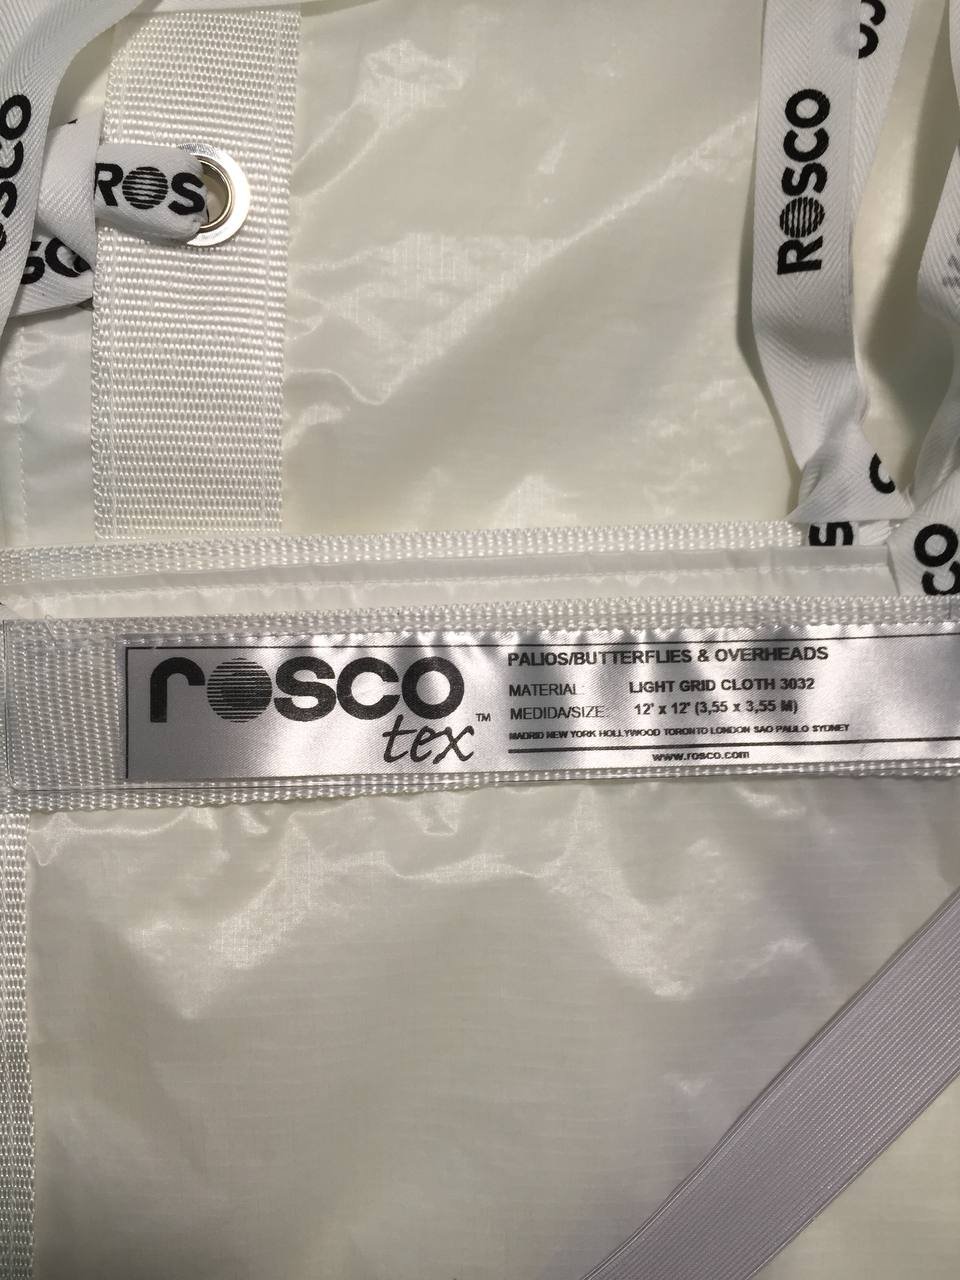 Рассеиватель Rosco BUTTERFLY 3032 LIGHT GRID CLOTH 3,55X3,55M-12'X12' (Half)